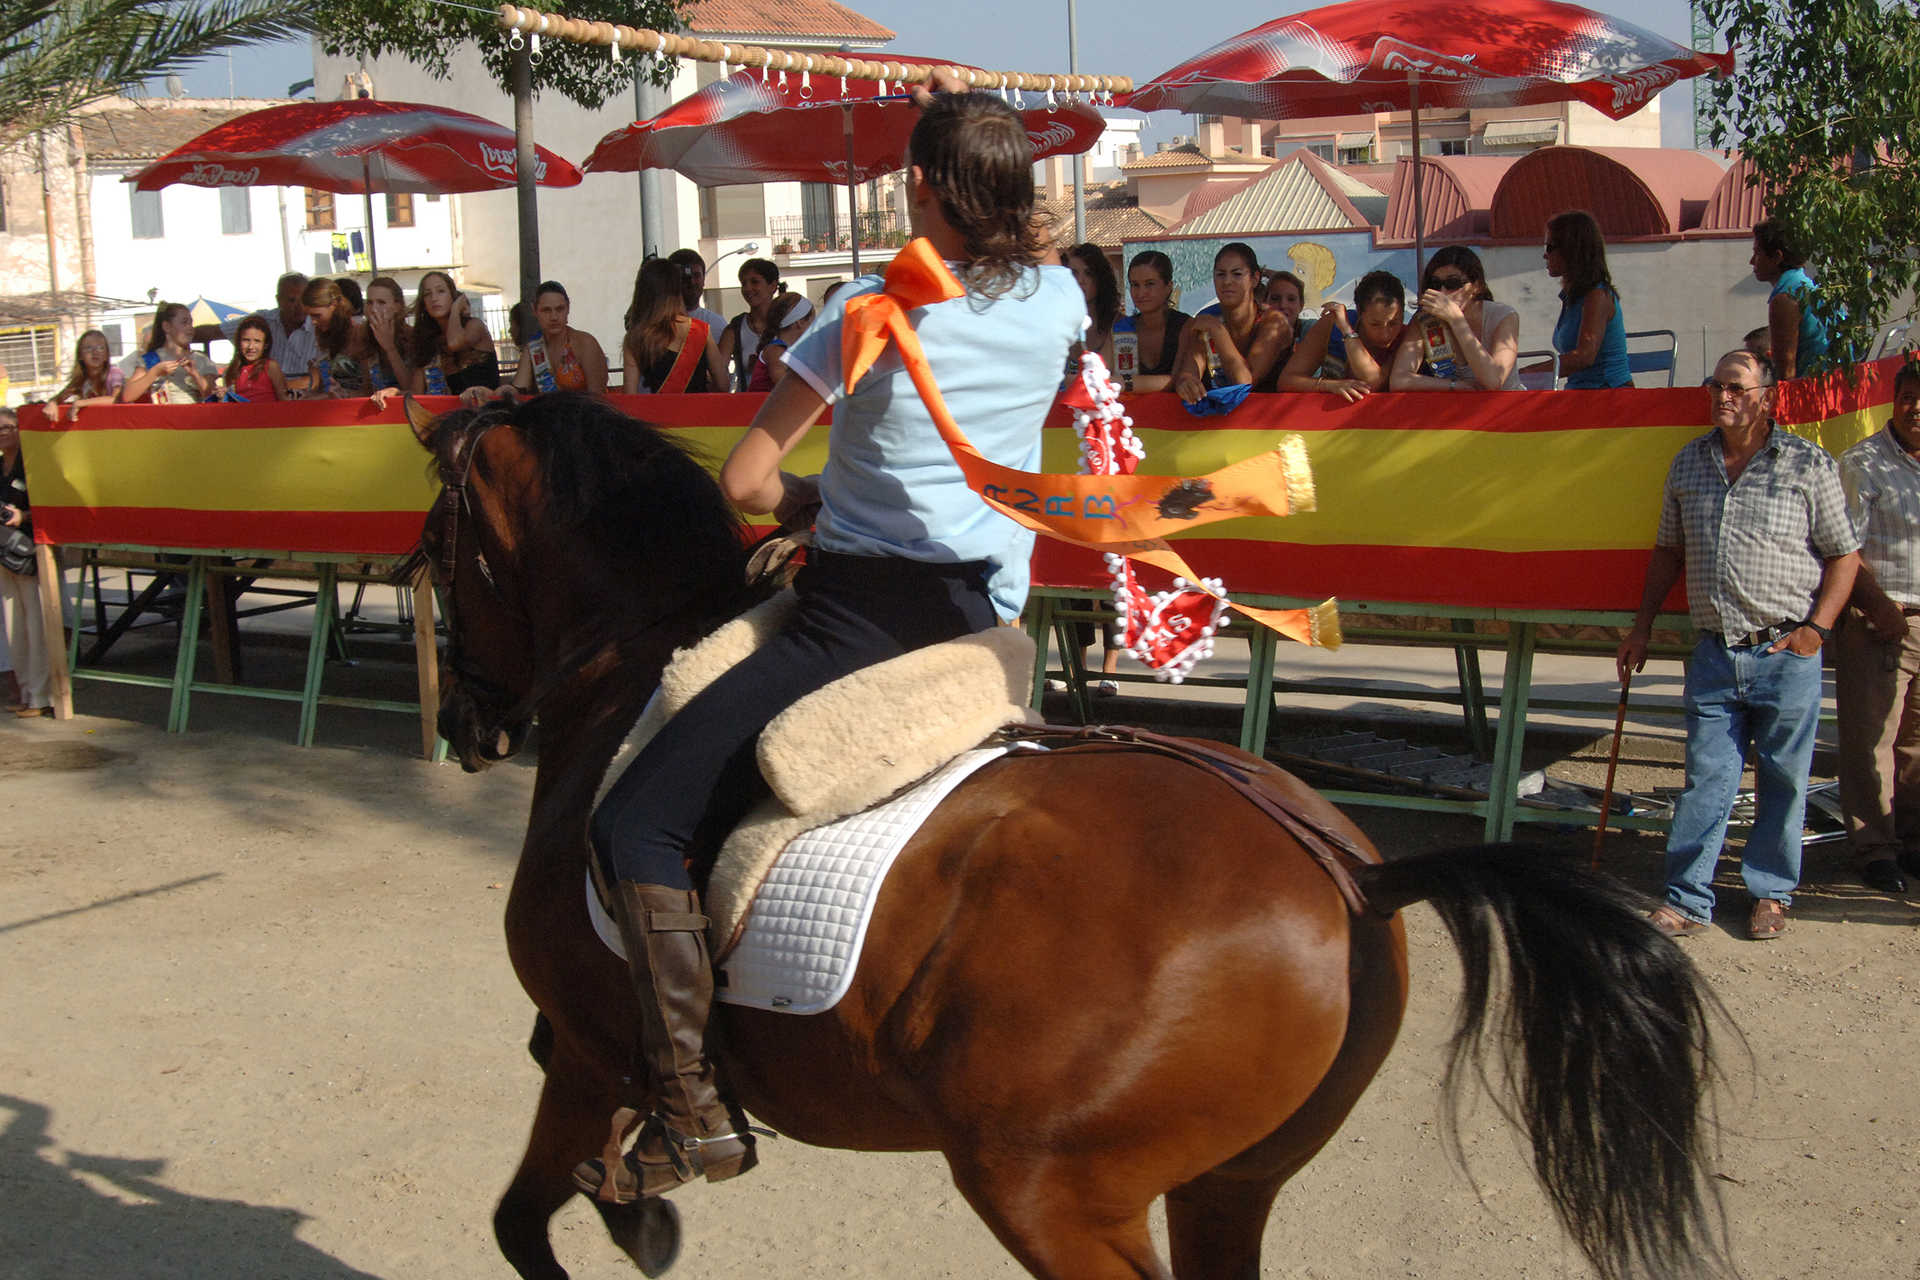 Fiestas Patronales de Segorbe. Festival of National Tourist Interest.